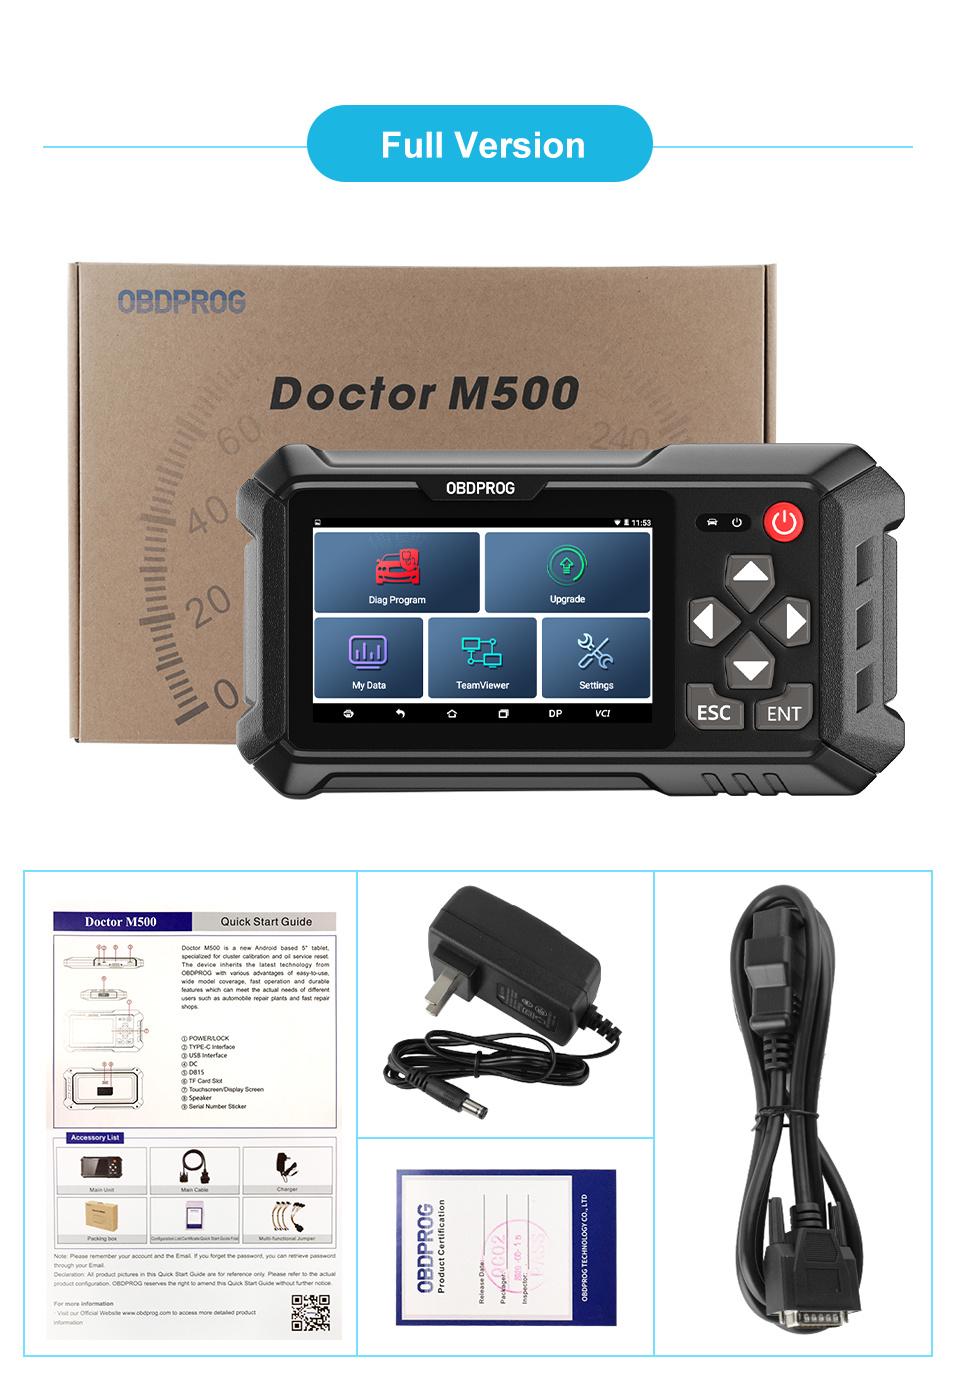 Obdprog M500 Car Cluster Calibration Tools OBD2 Diagnose Oil Reset Instrument Adjustment Tool Code Reader Automotive Scanner